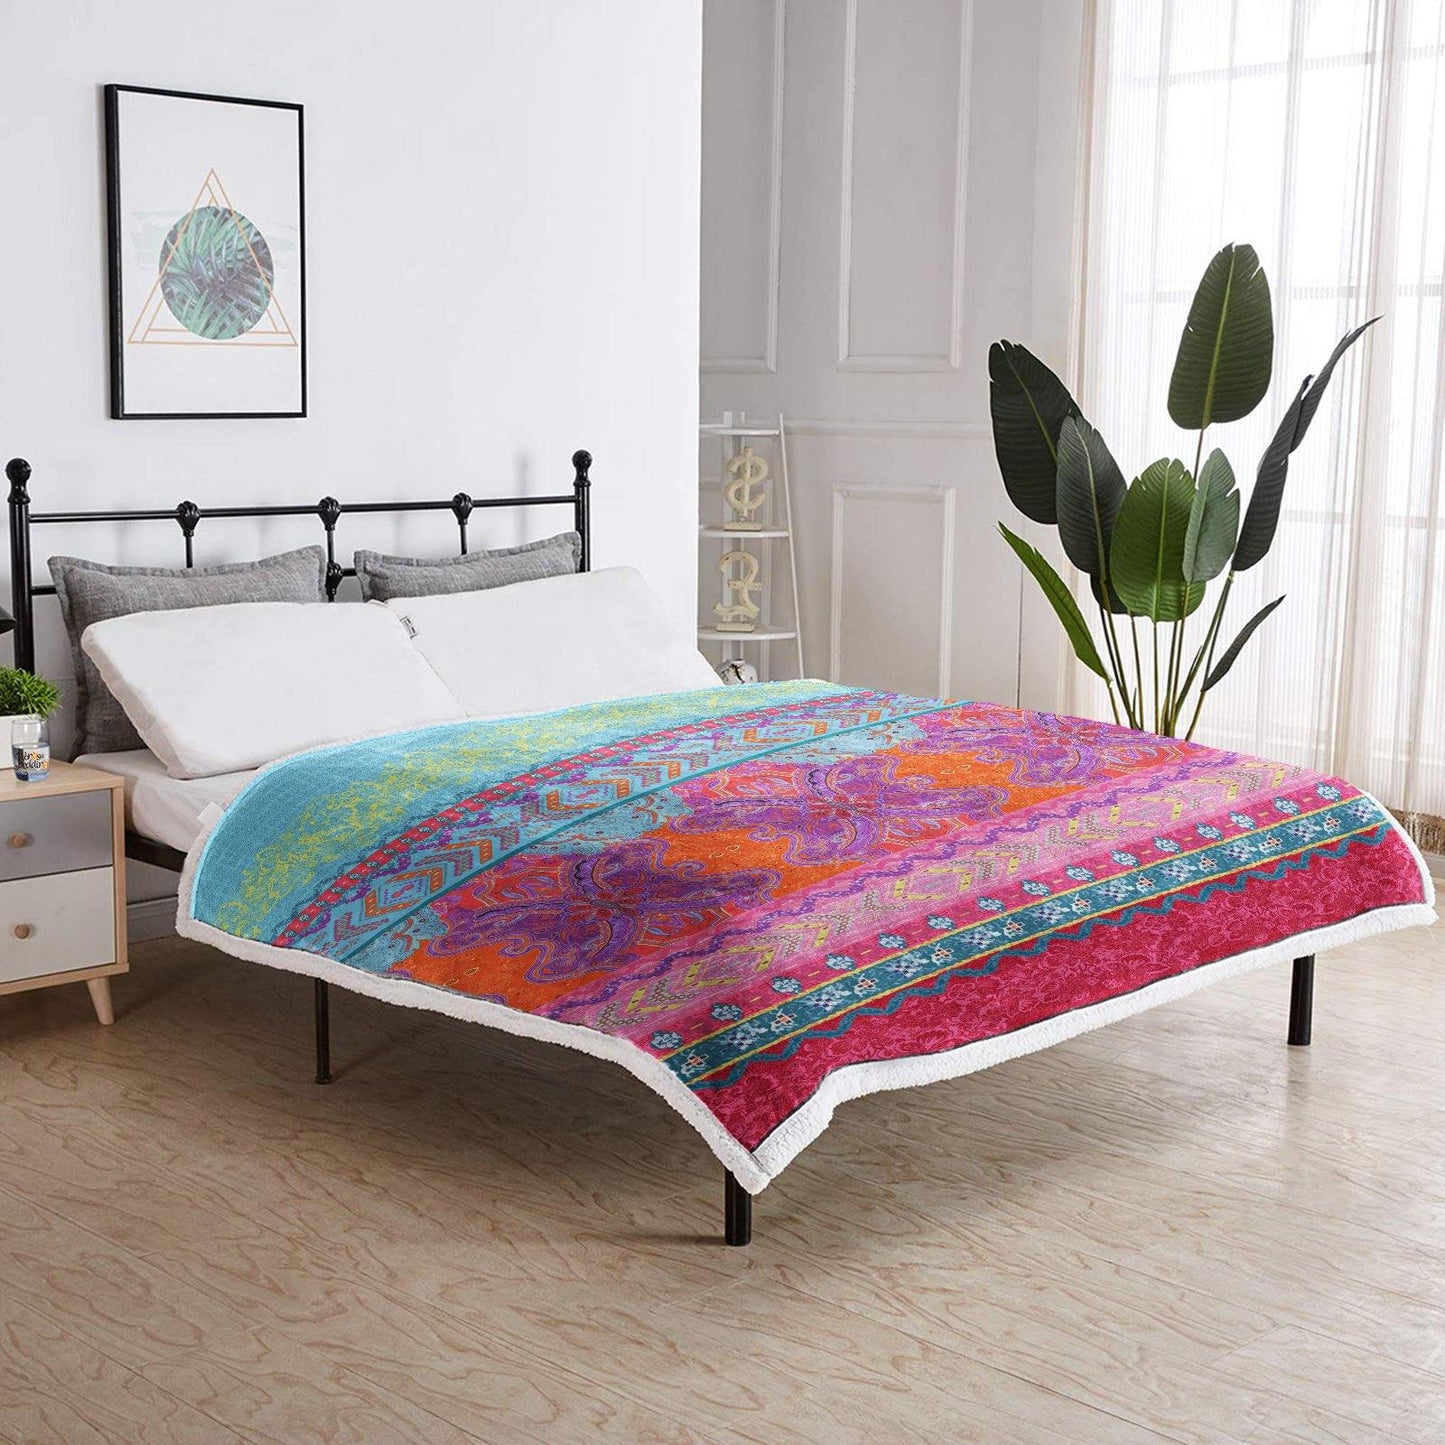 WONGS BEDDING Bohemian Stripes Blanket - Wongs bedding